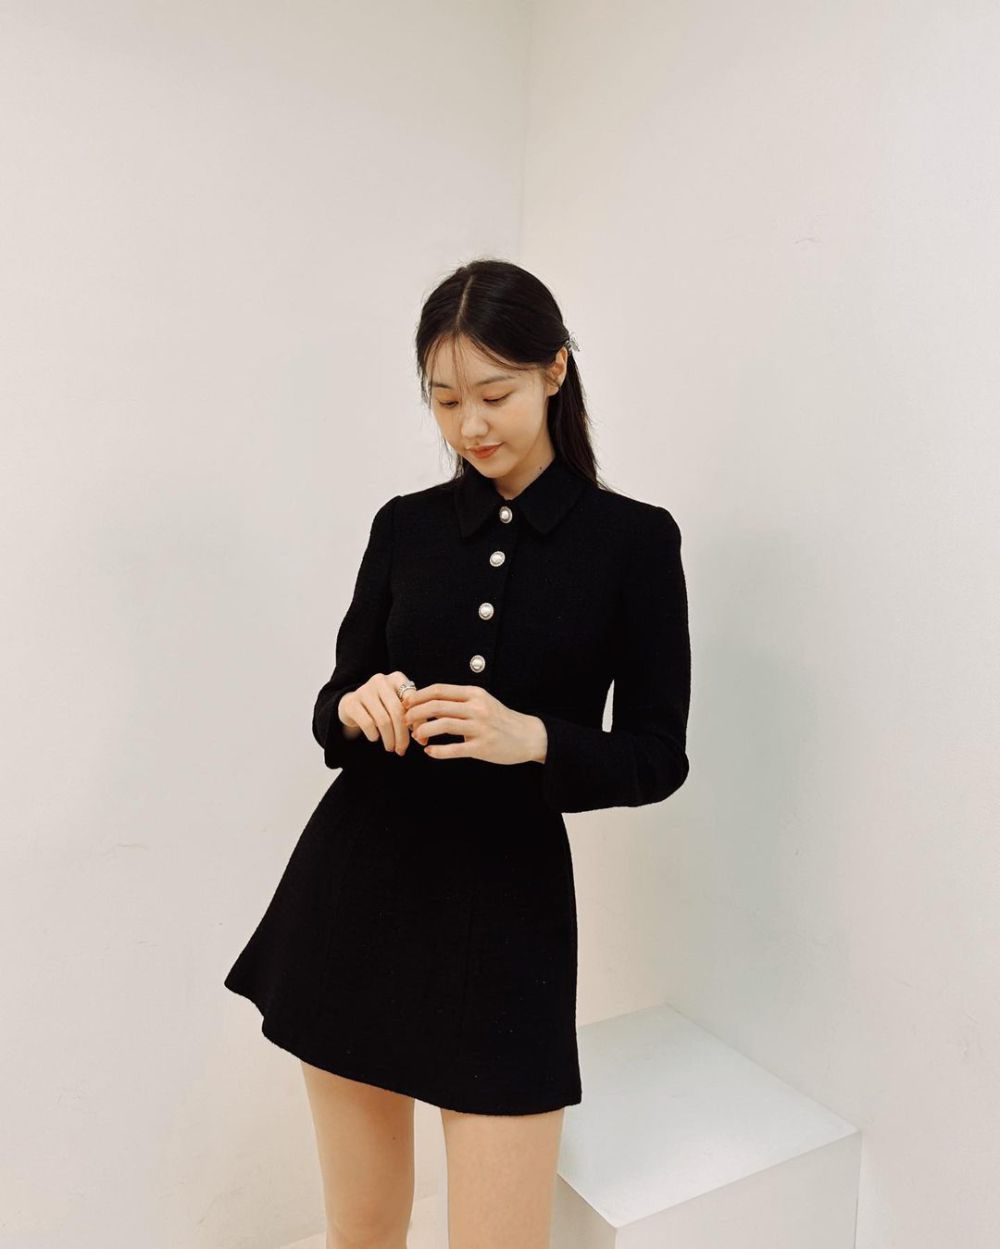 11 Ide Outfit Korean Style ala Kim Yewon yang Stylish buat ke Kantor!